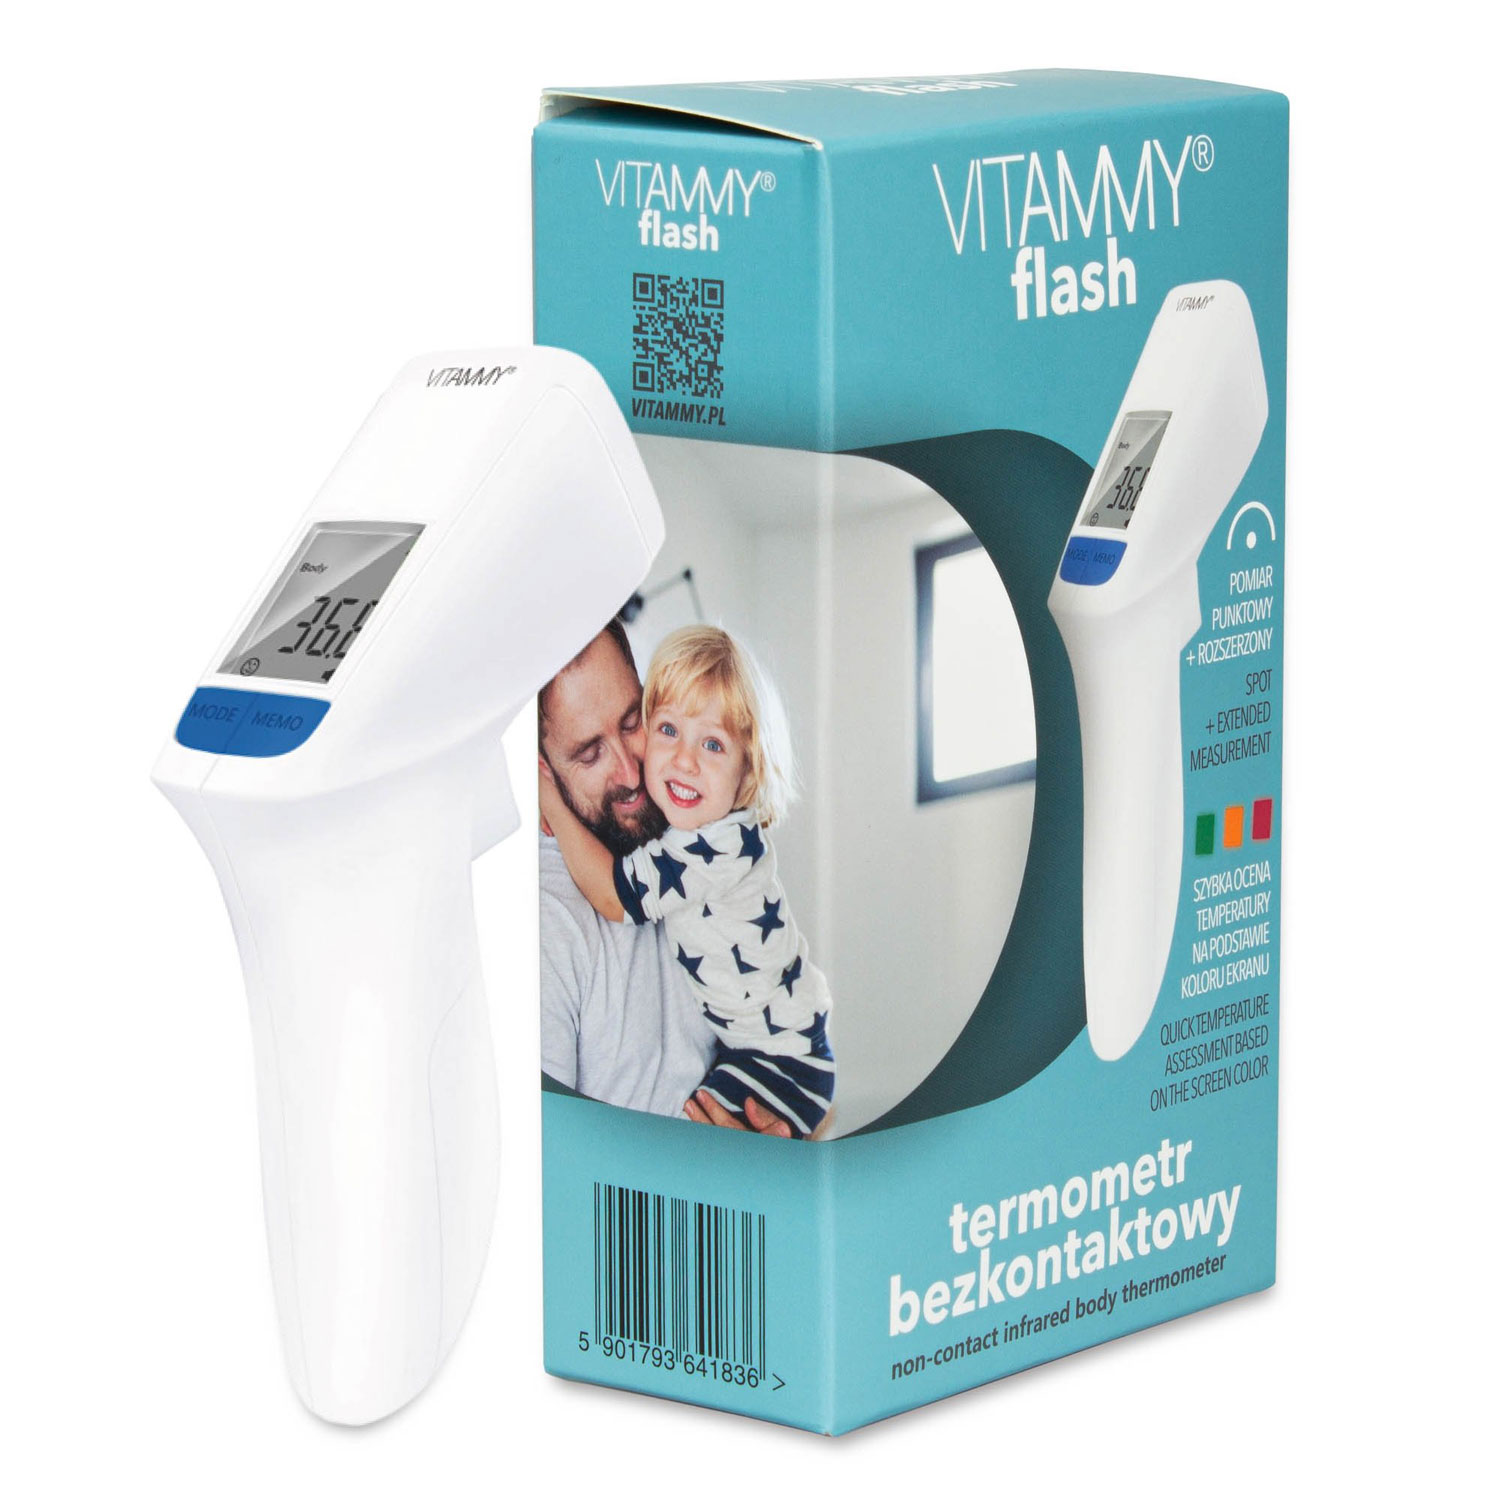 Termometru non-contact Vitammy Flash HTD8816C, tehnologie infrarosu, pentru frunte imagine